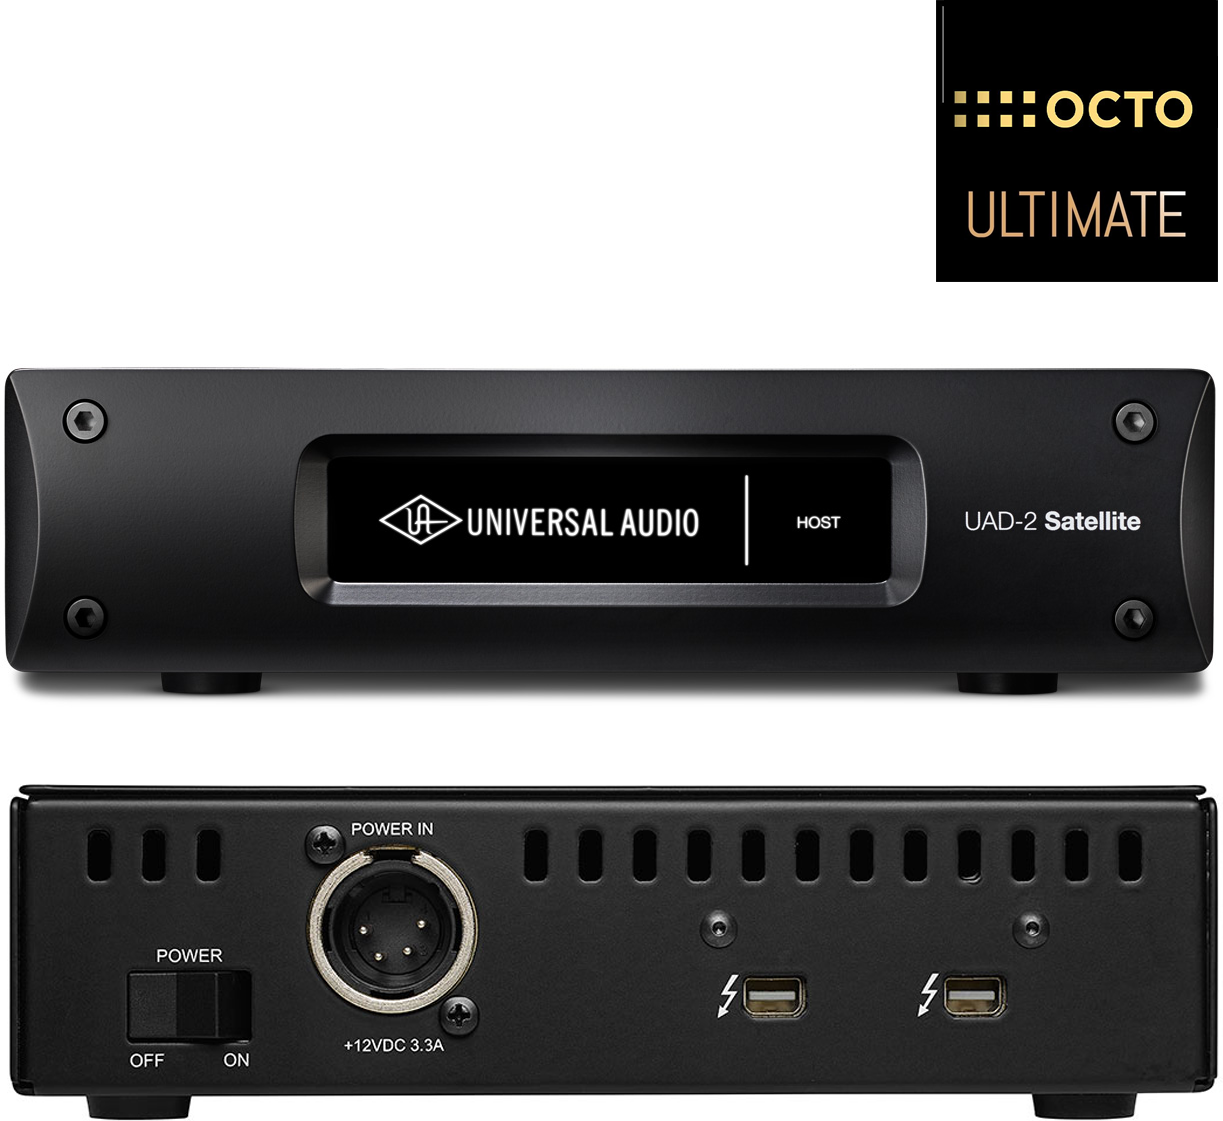 Universal Audio Uad-2 Satellite Thunderbolt Octo Ultimate 7 - Interface de audio USB - Main picture